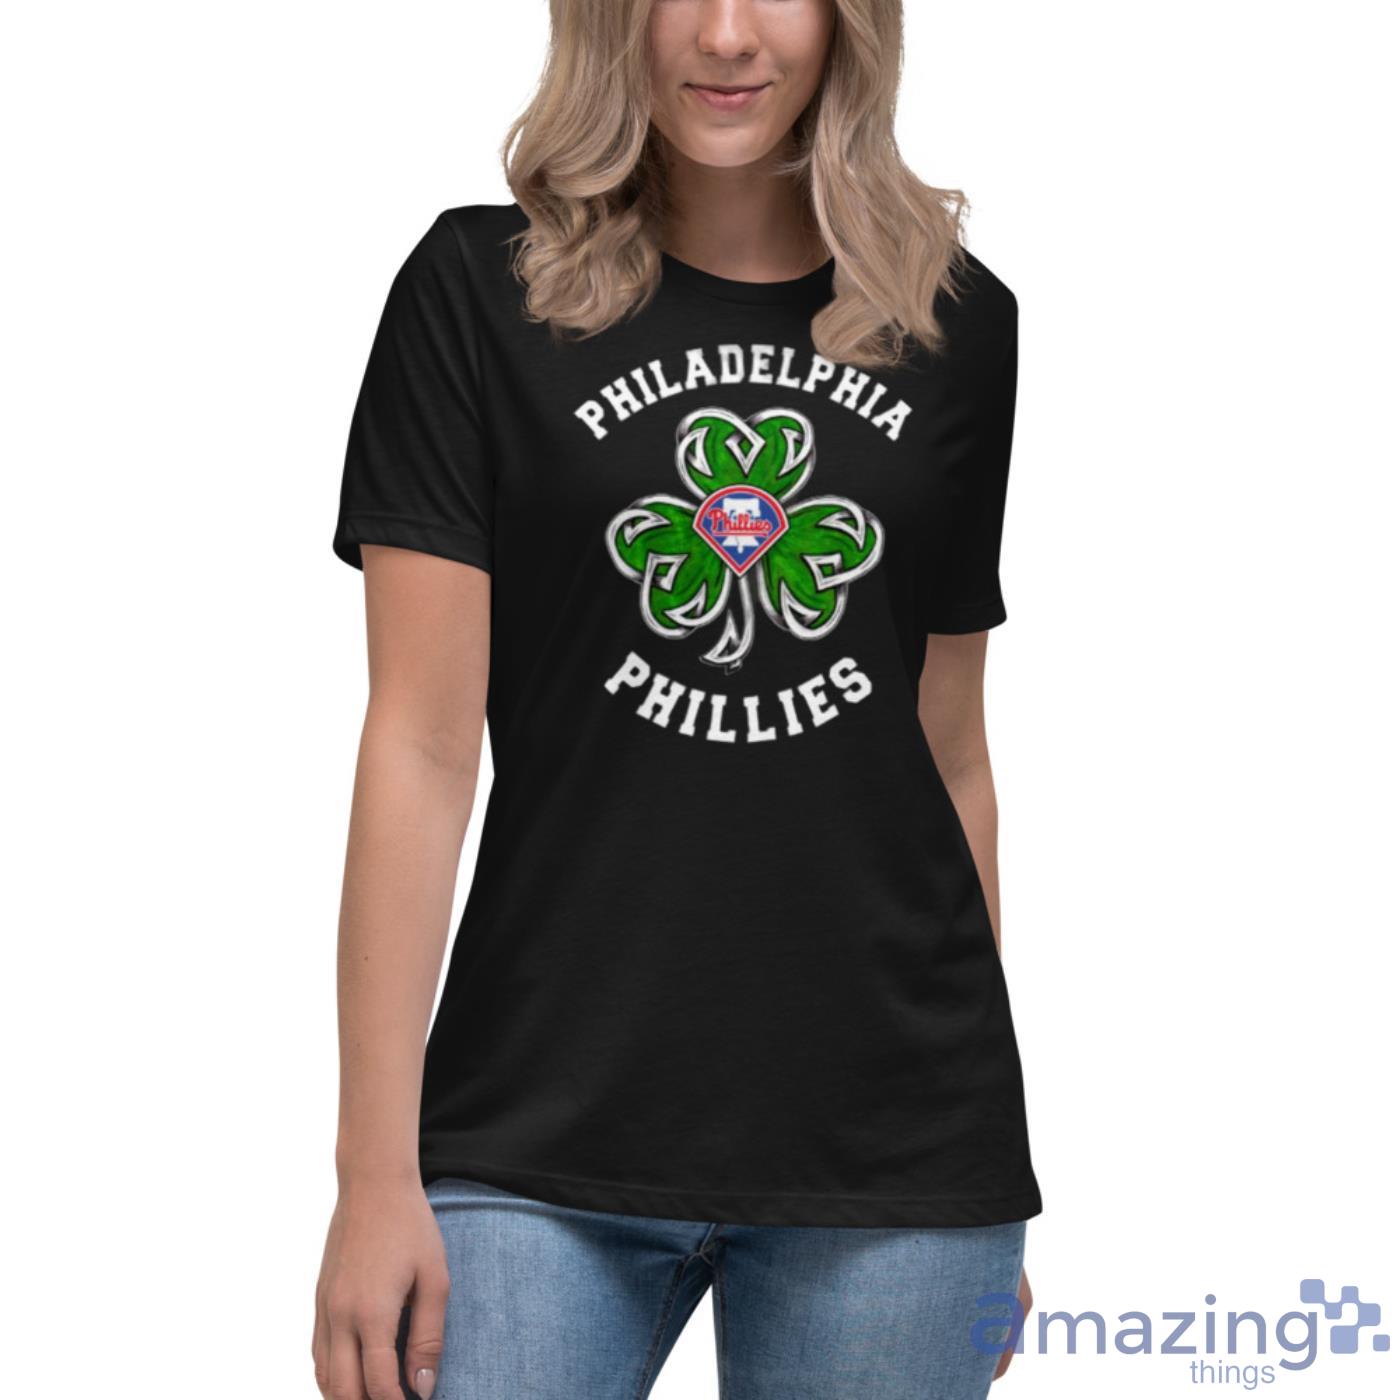 Phillies St. Patrick's Day Shirt 